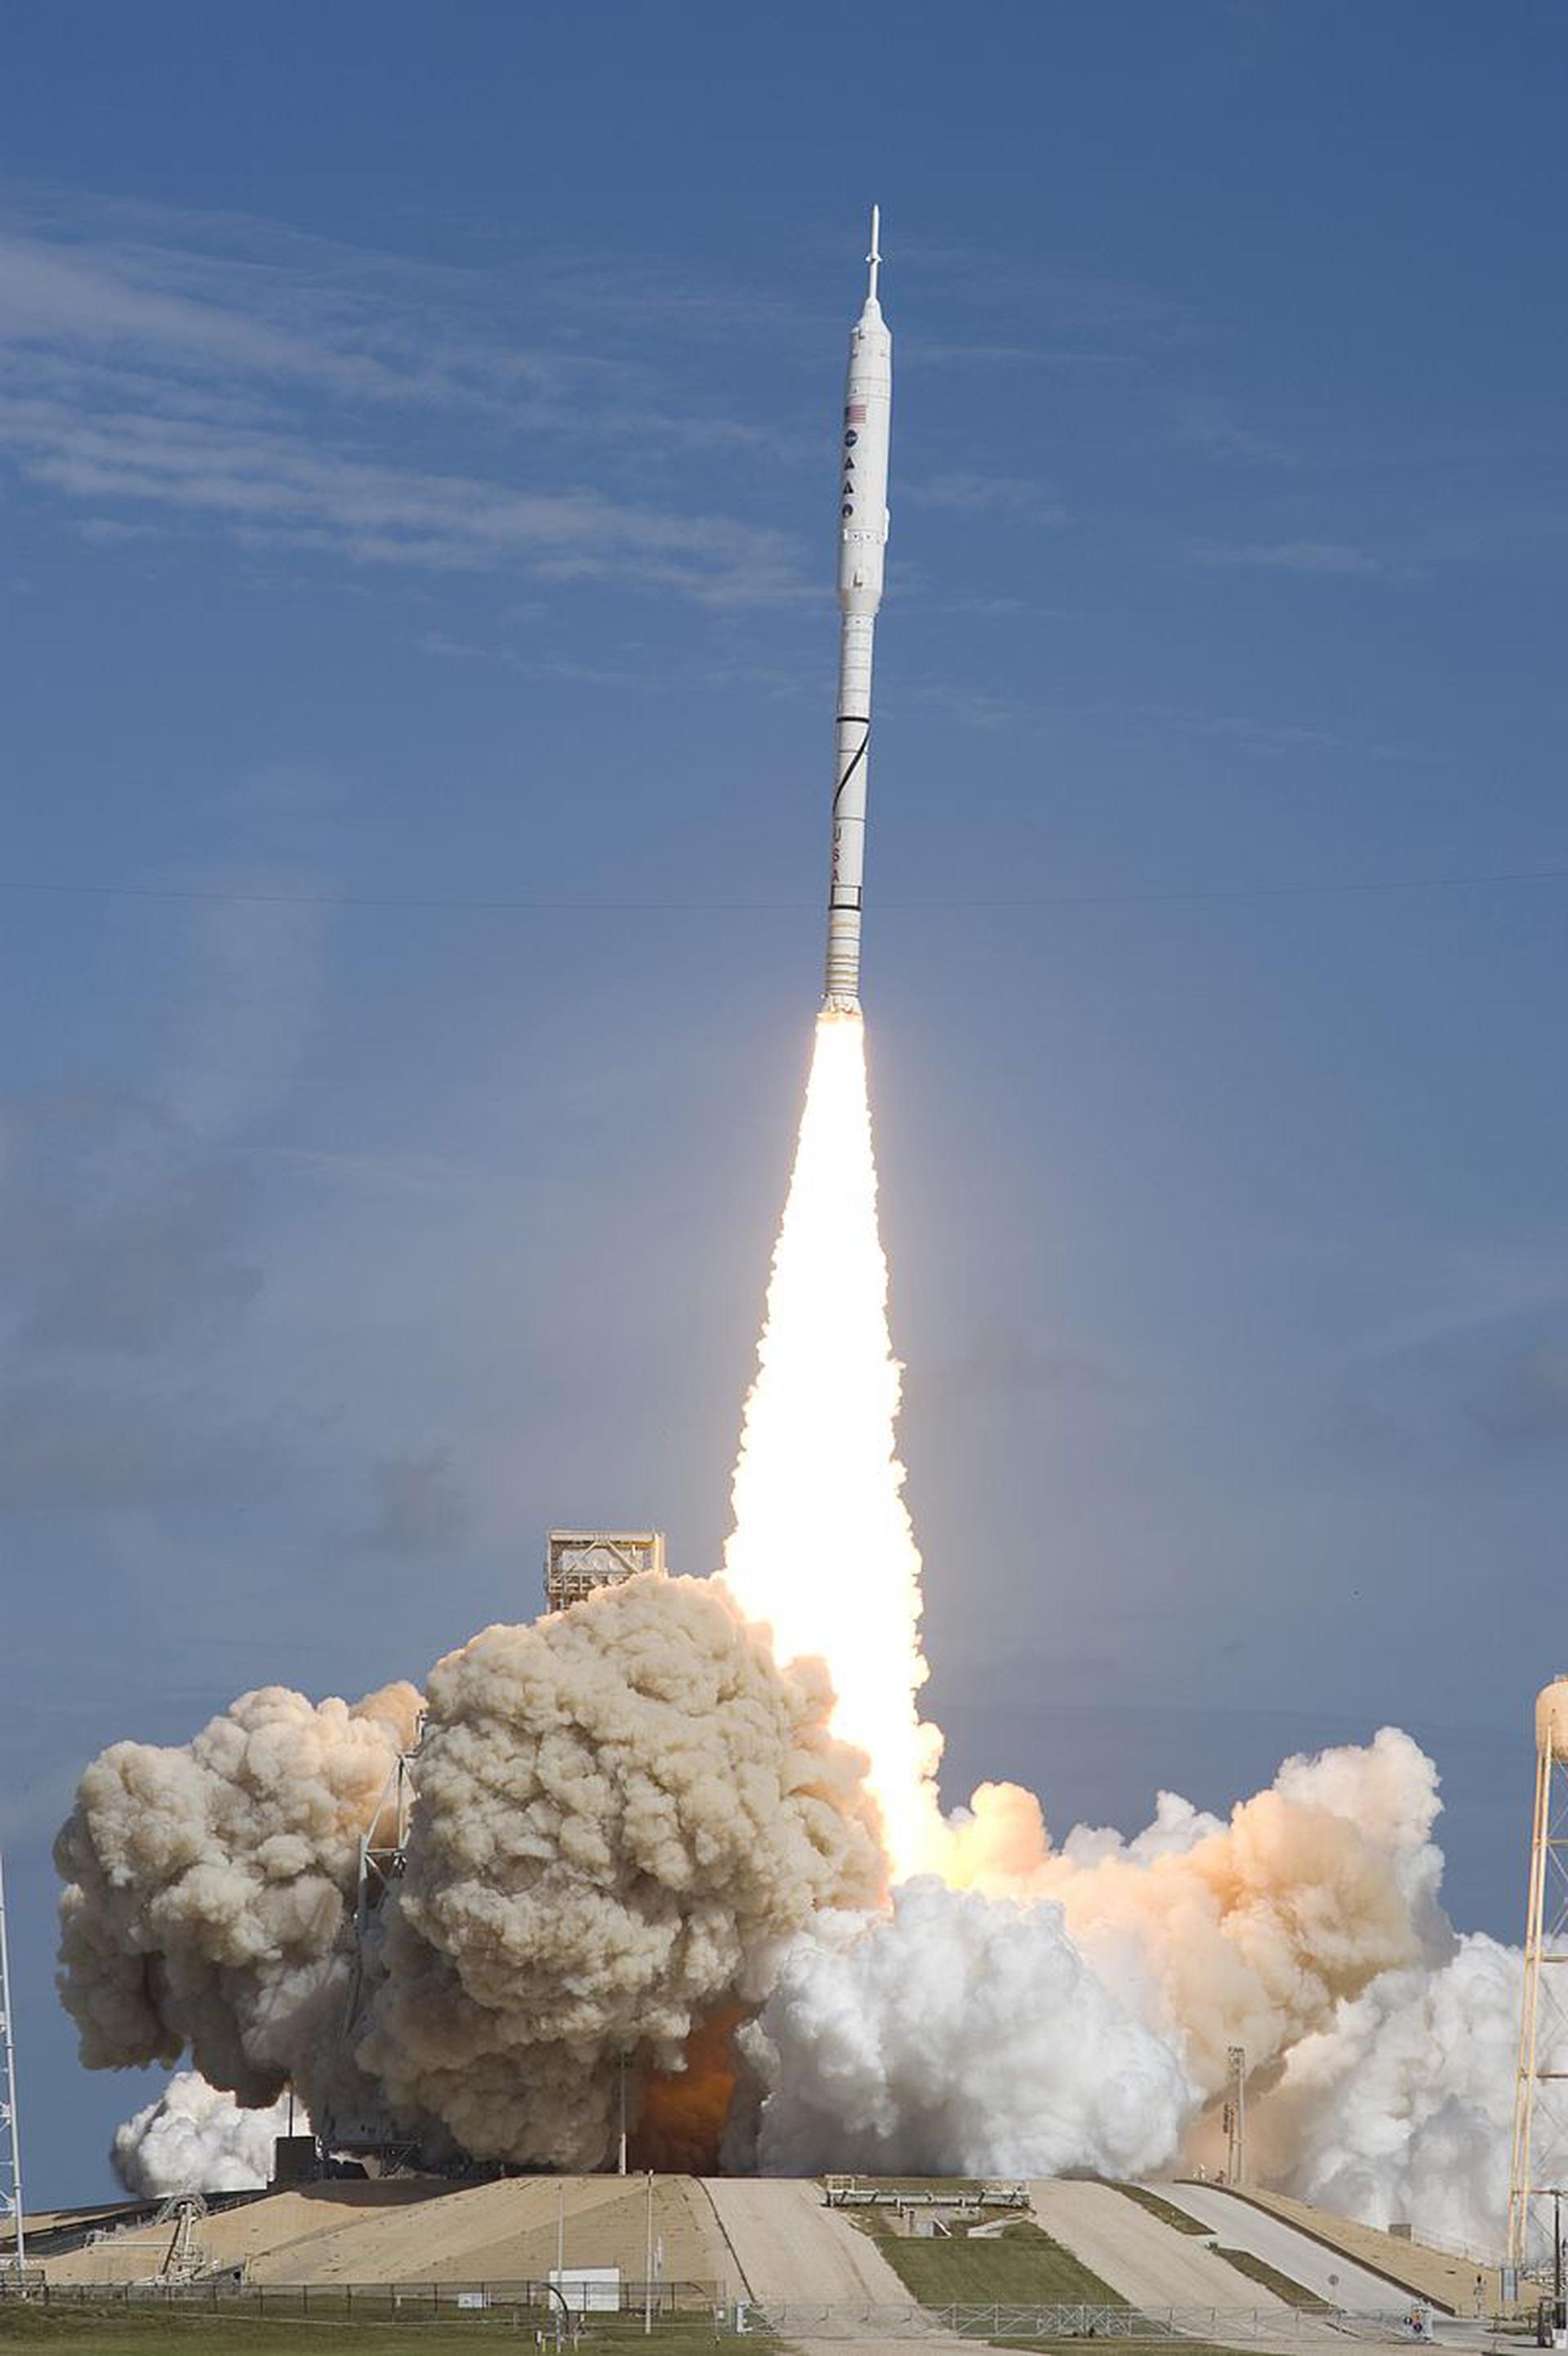 Ares I-X rocket